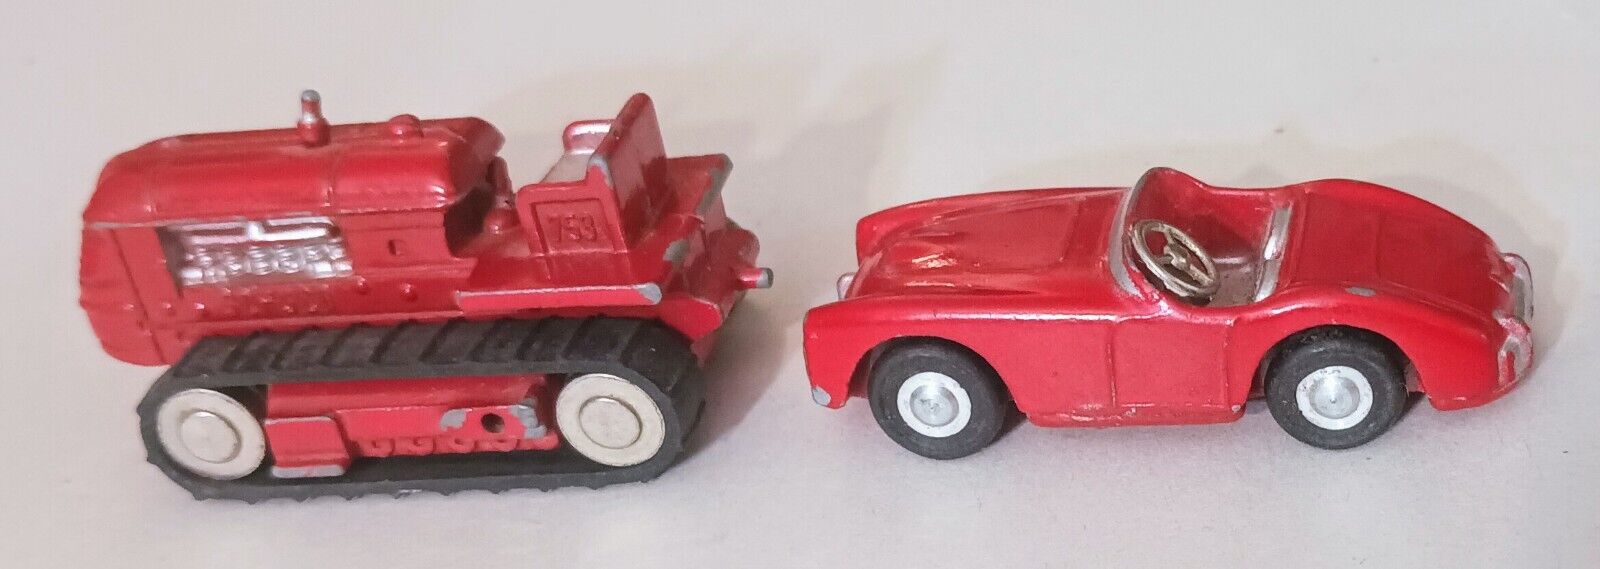 Schuco piccolo 709 Austin Healey And Tractor 753 Both Originals Vintage Red.